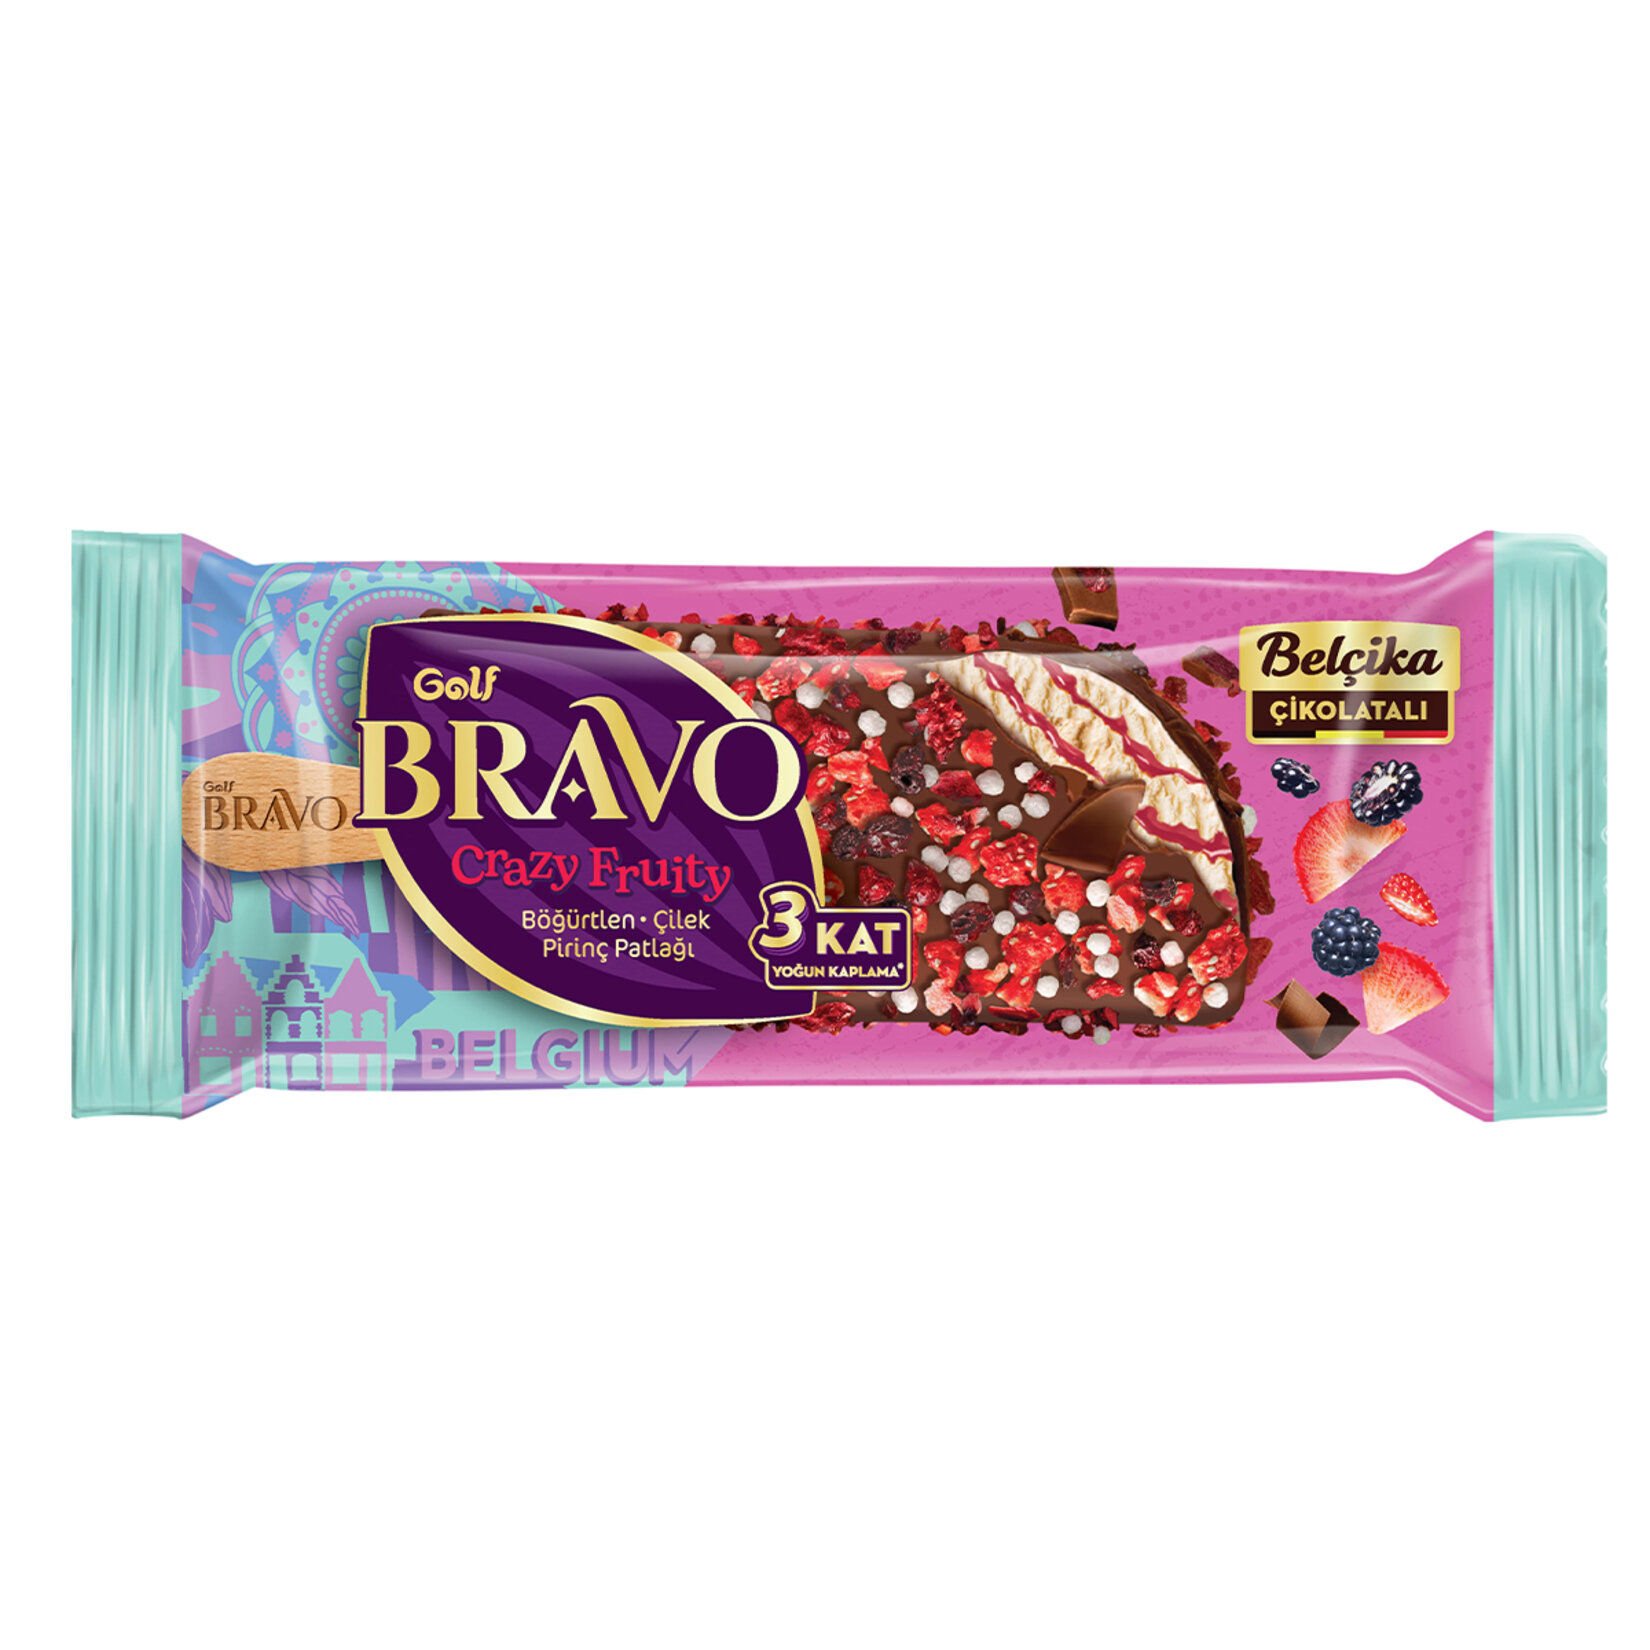 Golf Bravo Crazy Fruity Böğürtlen-Çilek-Pirinç Patlağı Dondurma 90ml